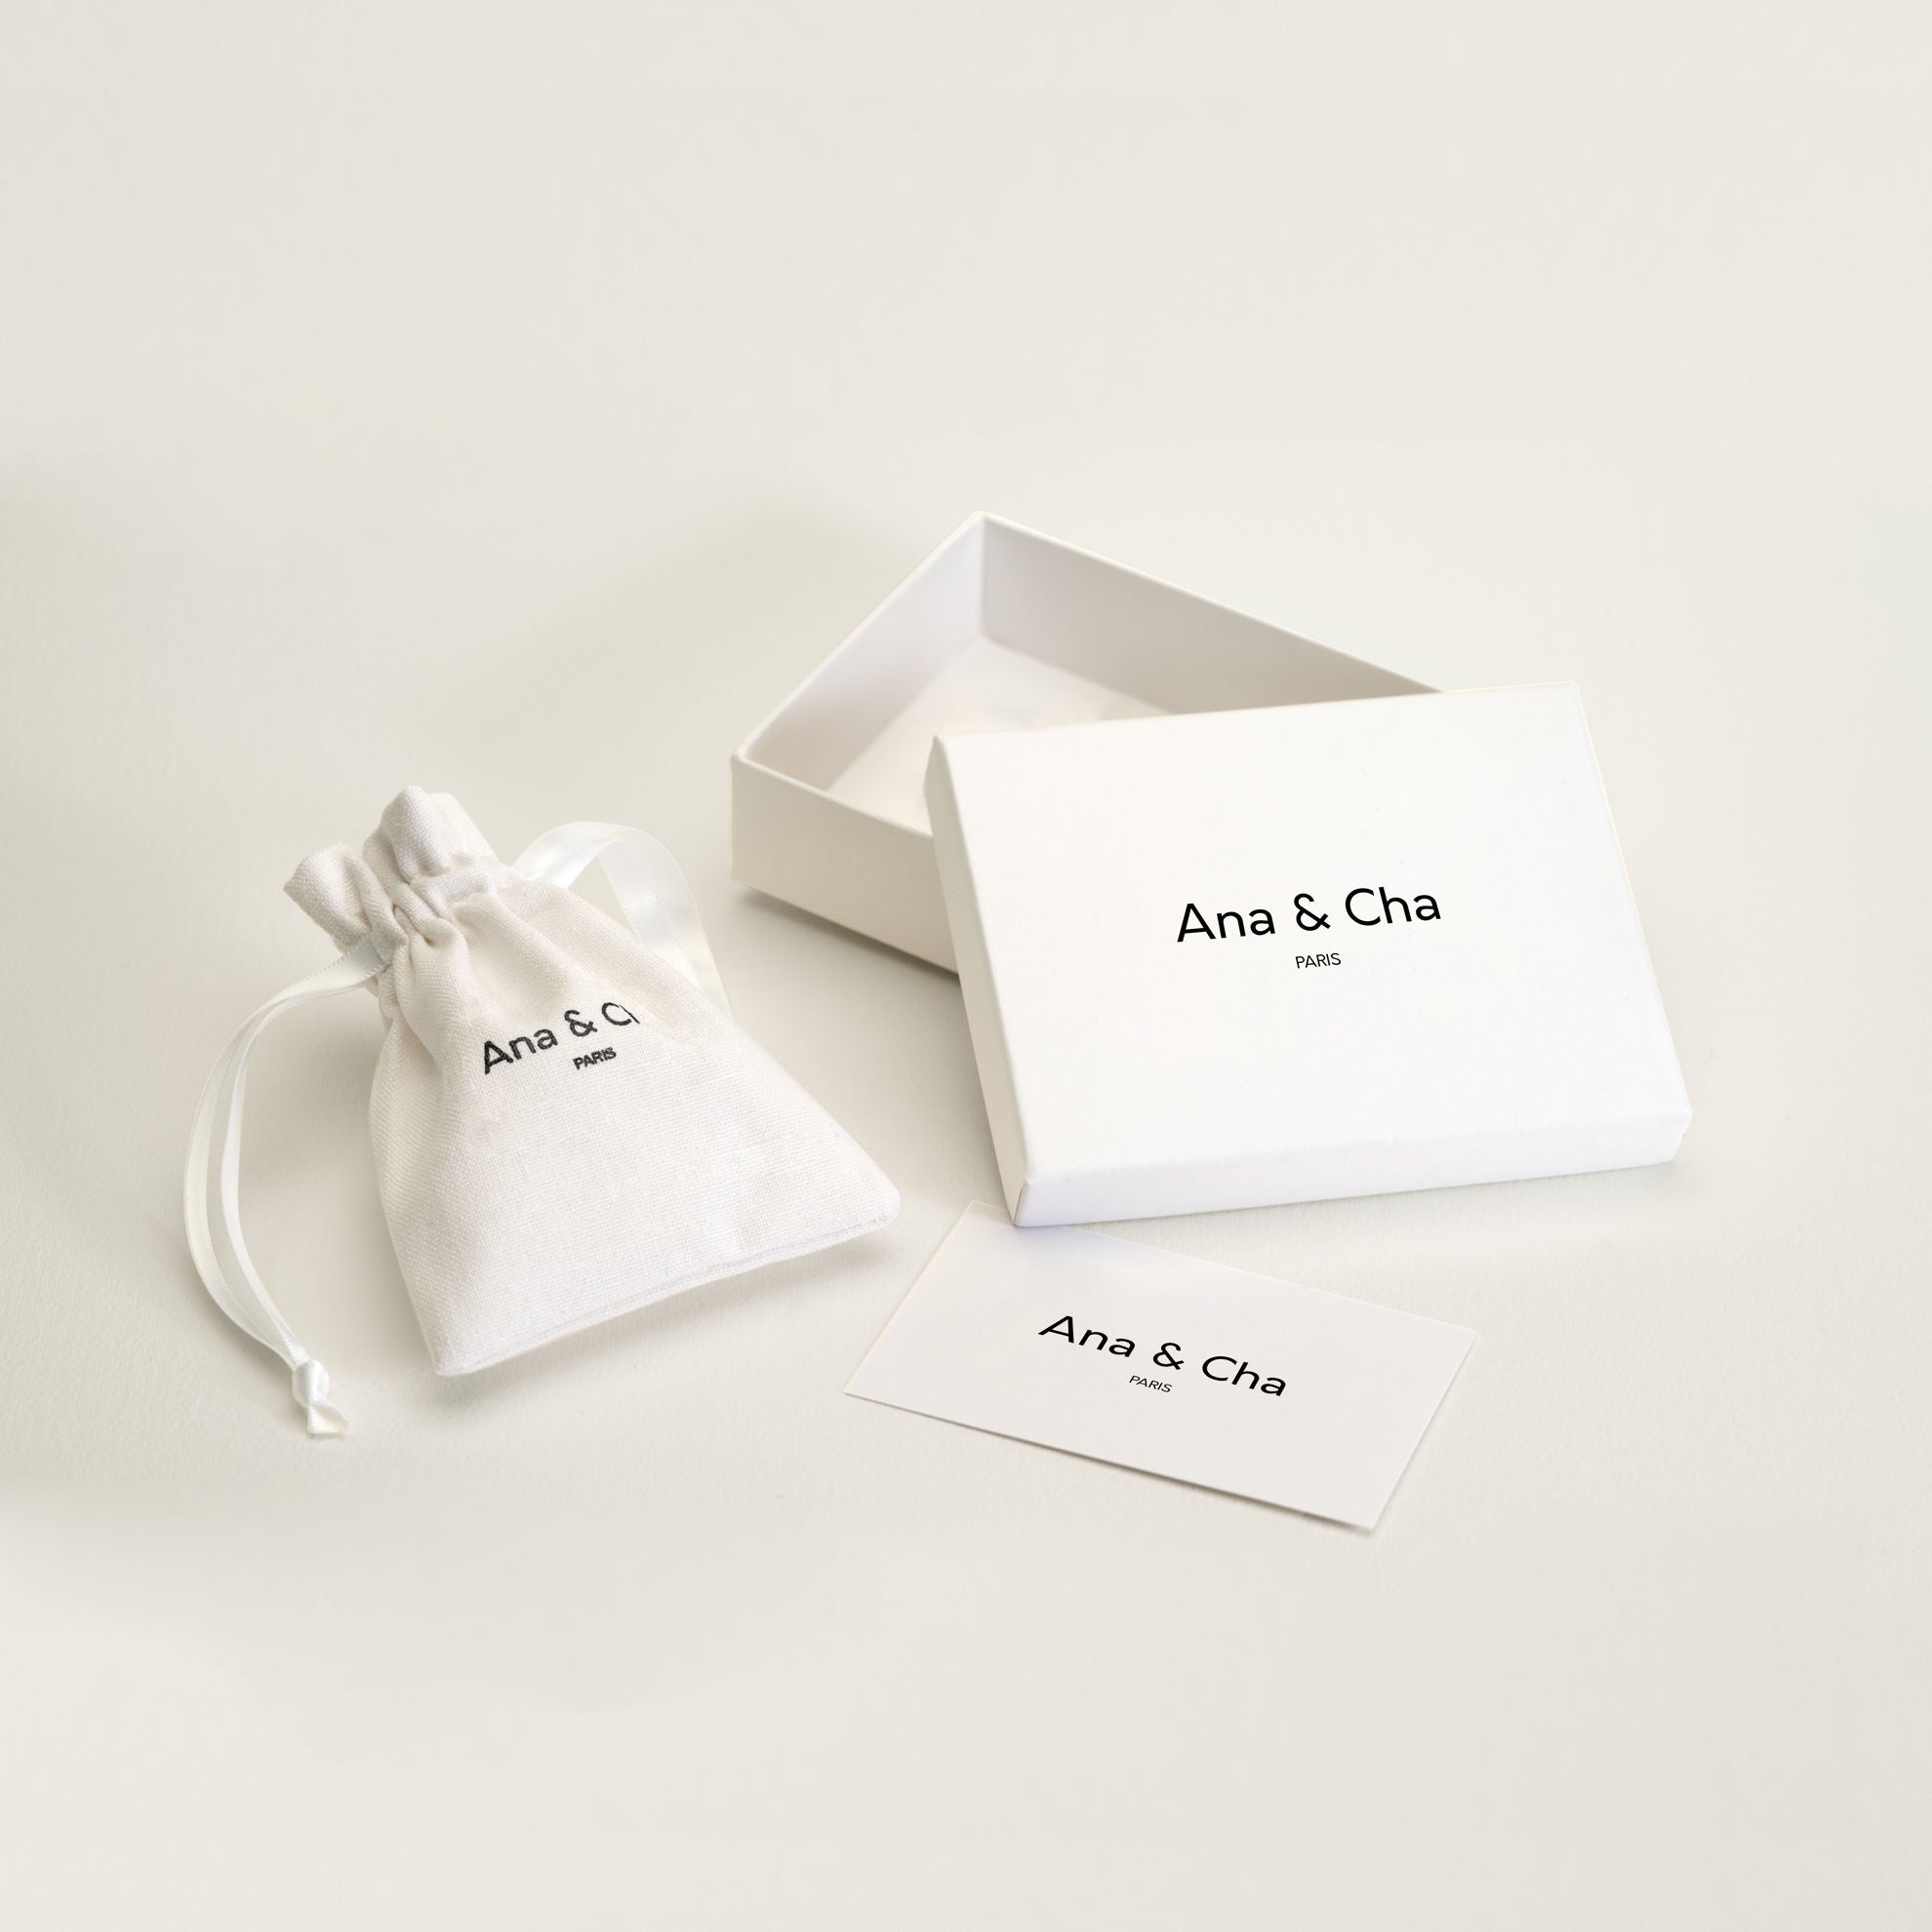 Ania - Gold Plated Earrings - Ana et Cha